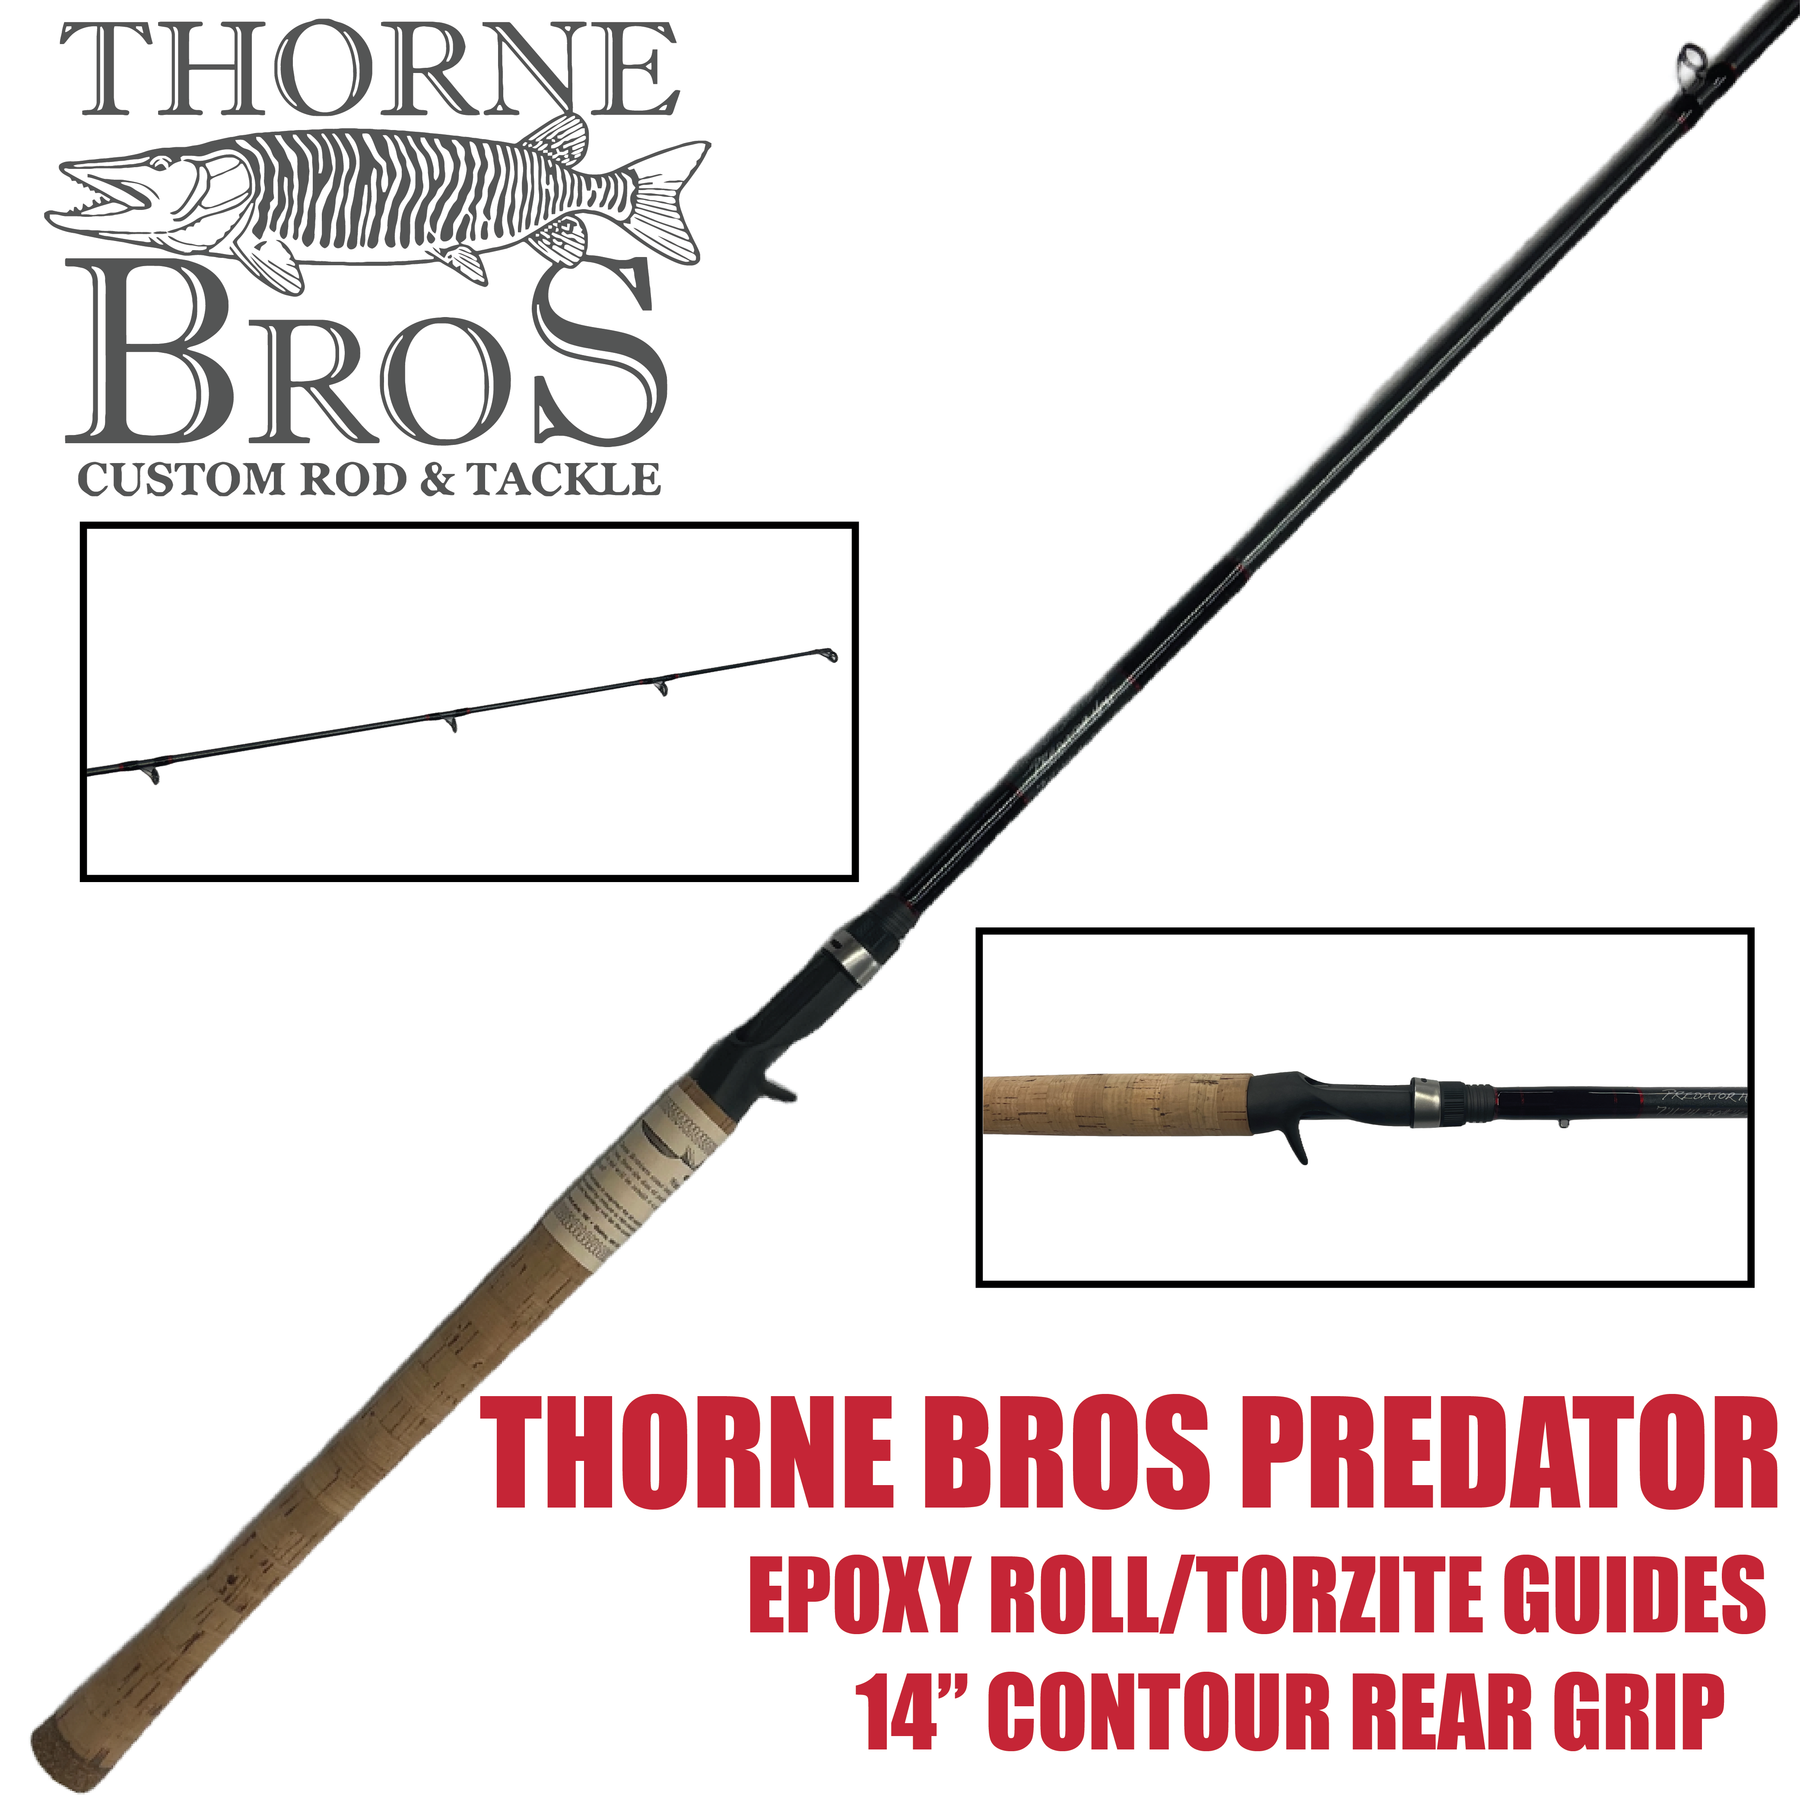 Thorne Bros. Predator Bass/Walleye Rods - Casting